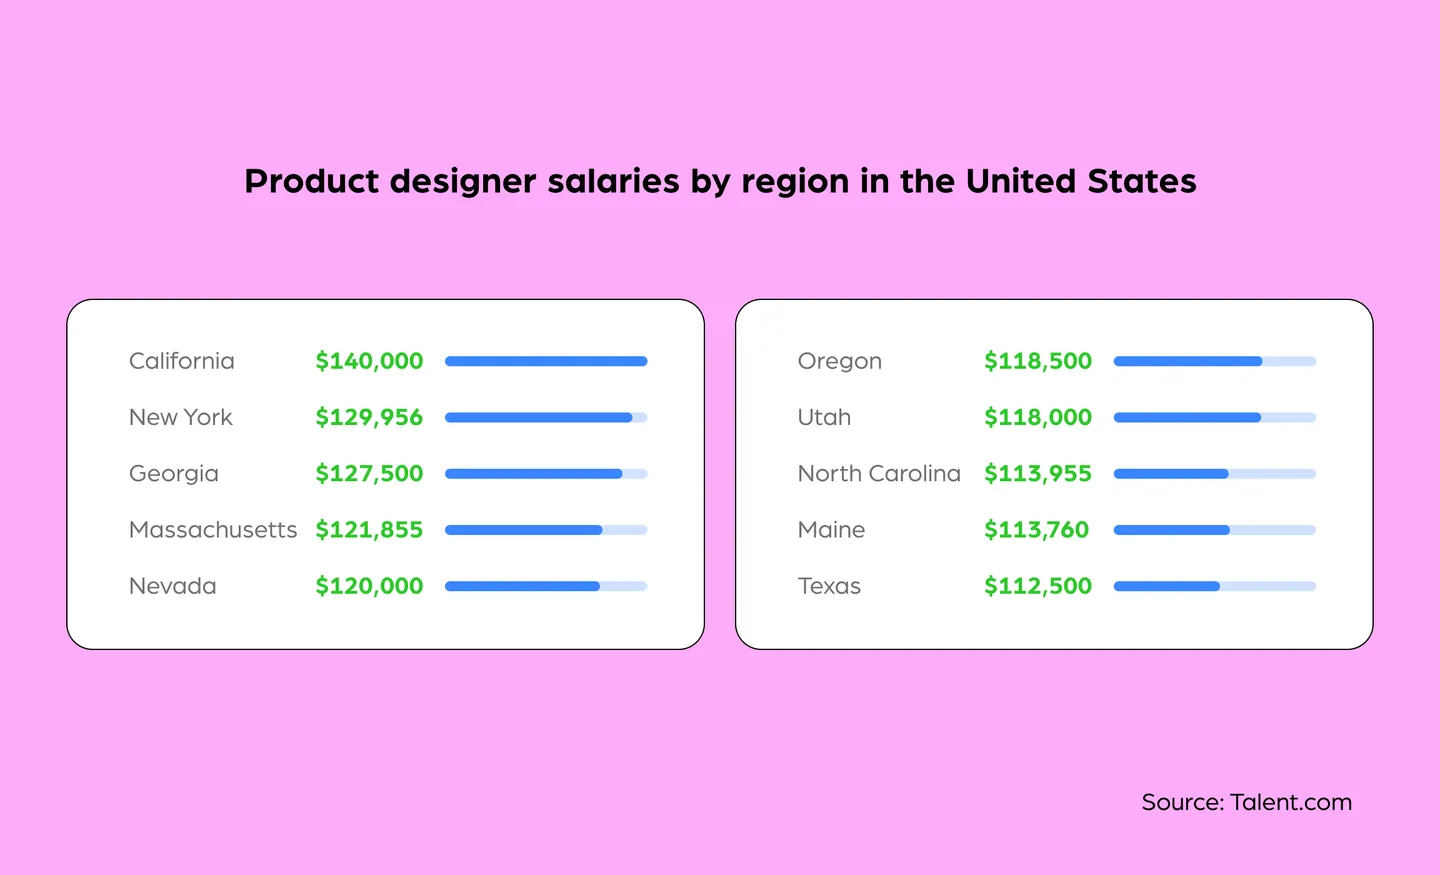 Product designer salaries by region. Source: Talent.com